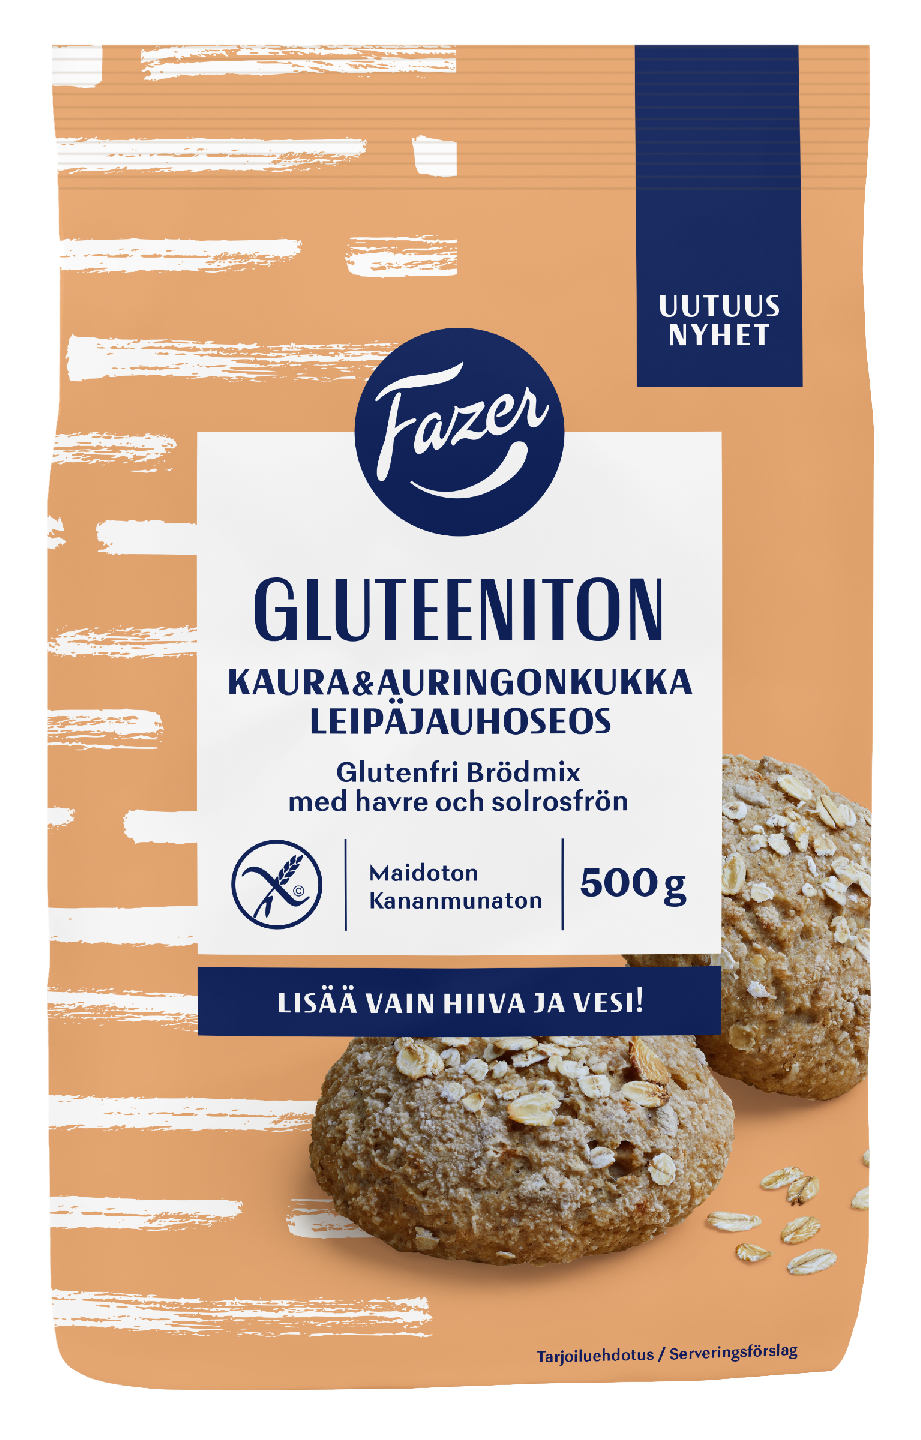 Fazer Gluteeniton Kaura & auringonkukka leipäjauhoseos 500g